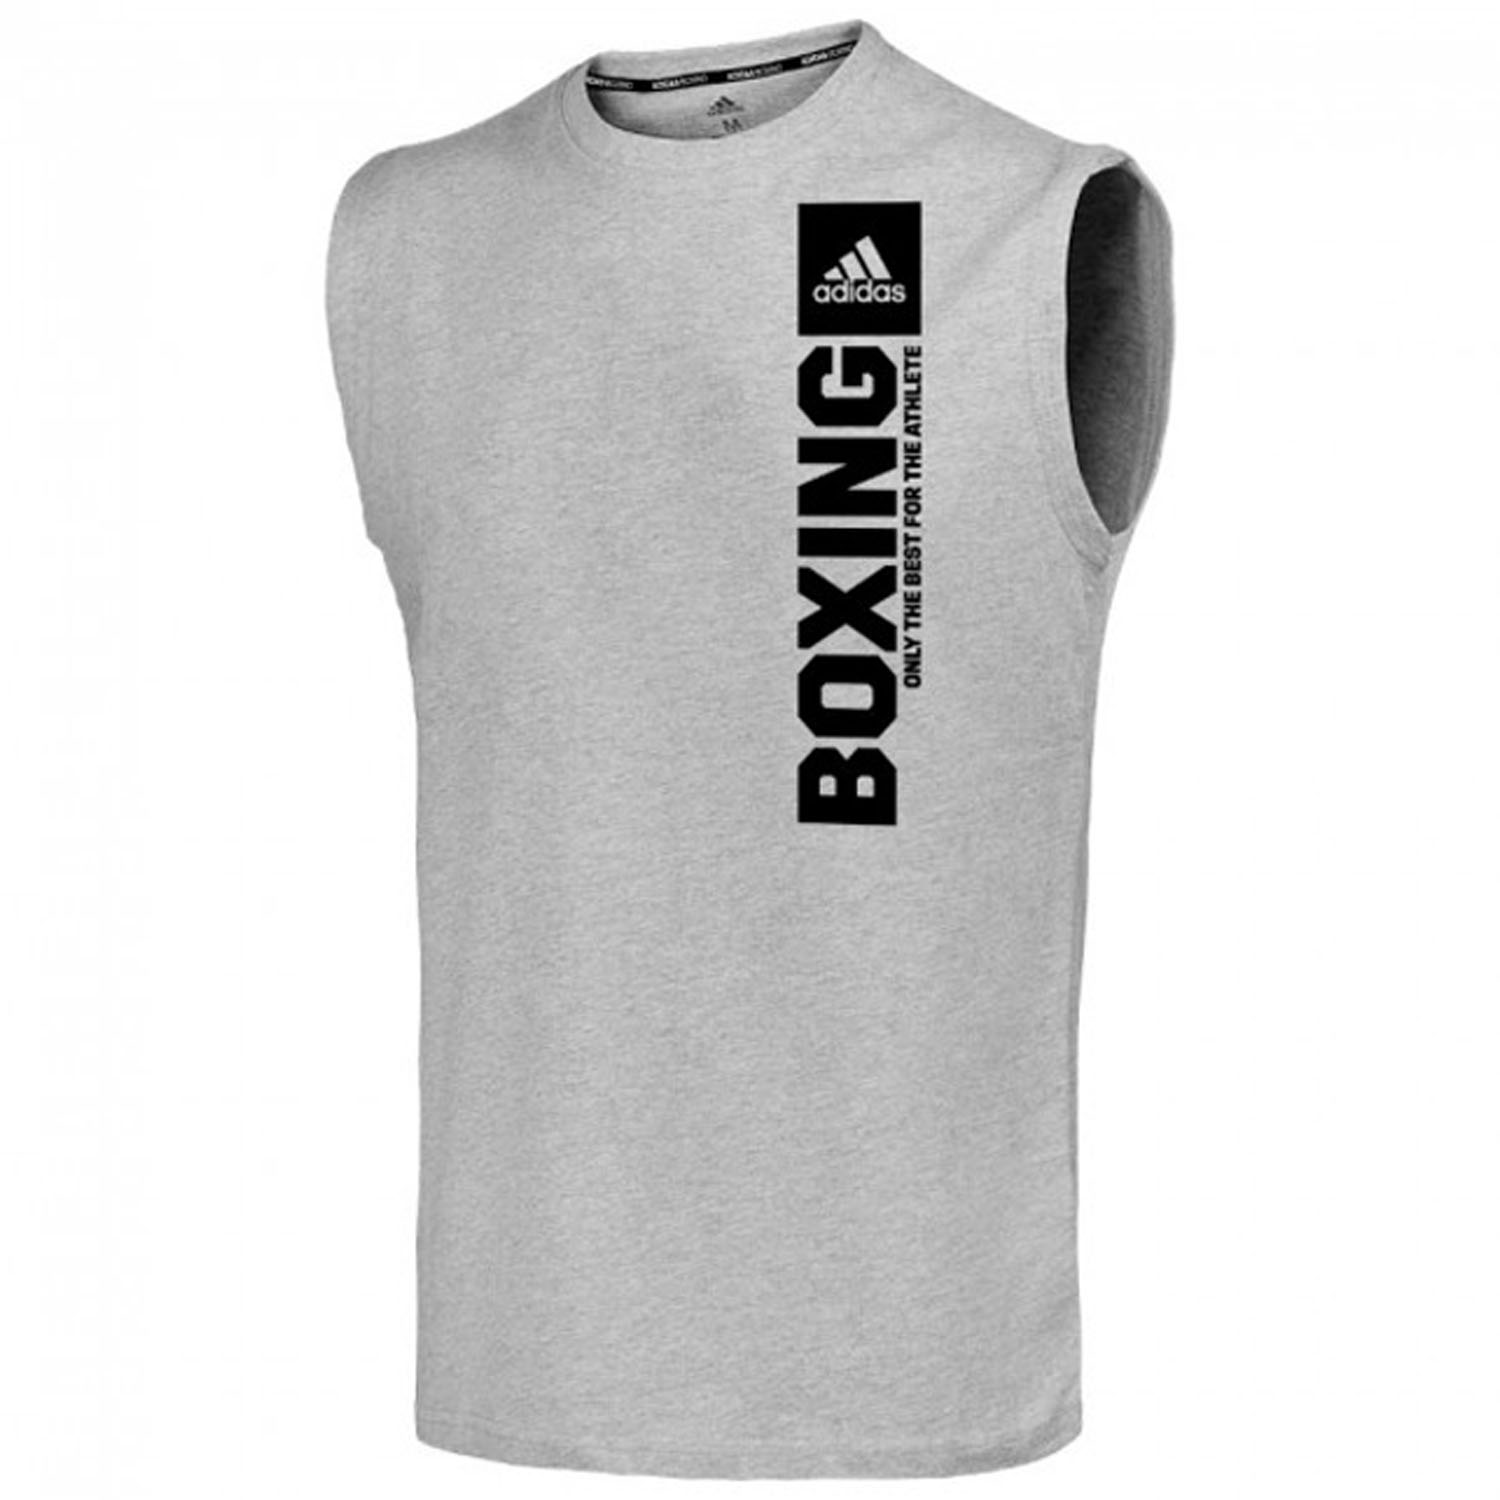 adidas Sleeveless T-Shirt, Community Vertical Boxing, grau, XL